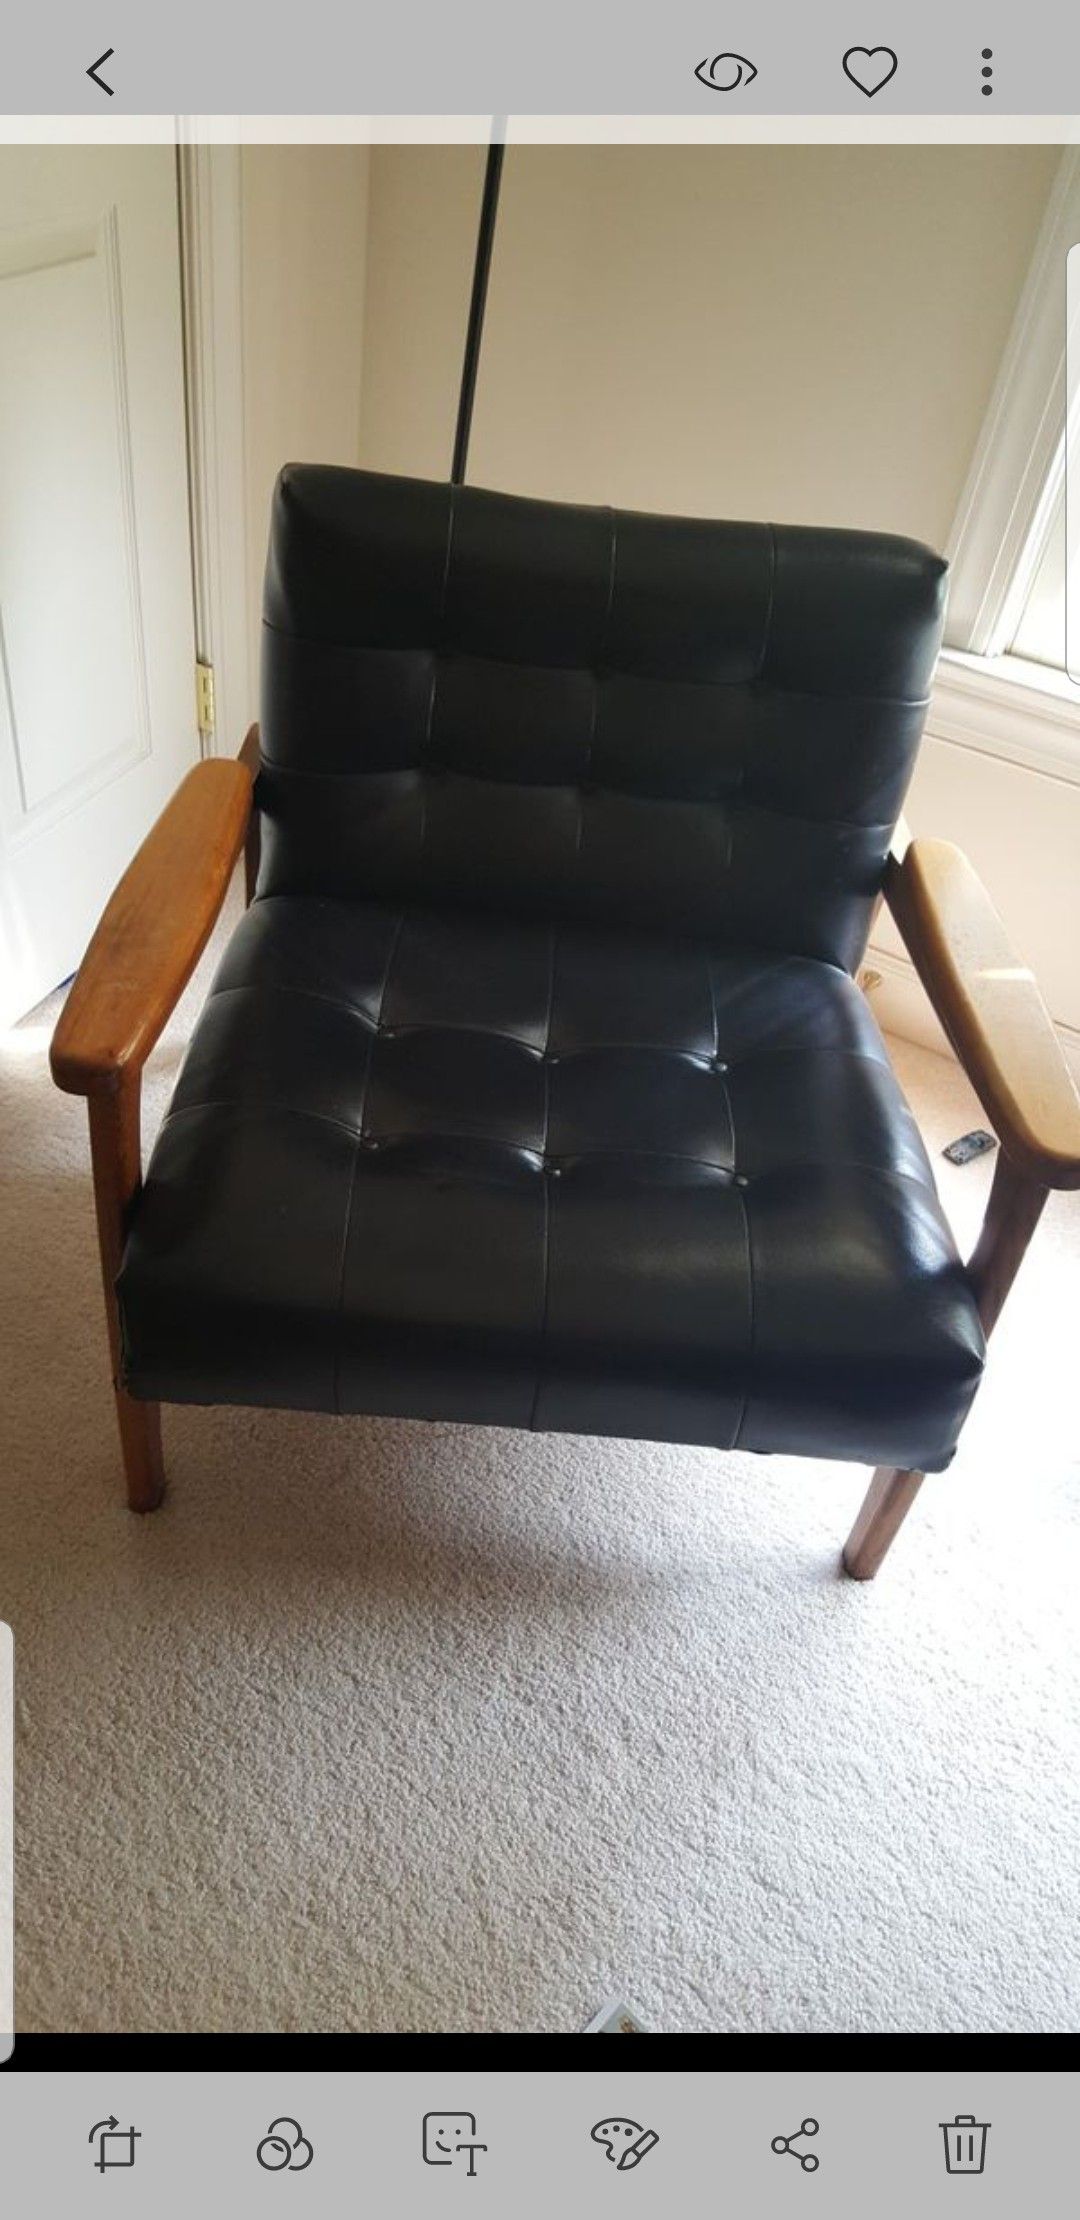 MCM Lounge Chair - $175.00 (obo)